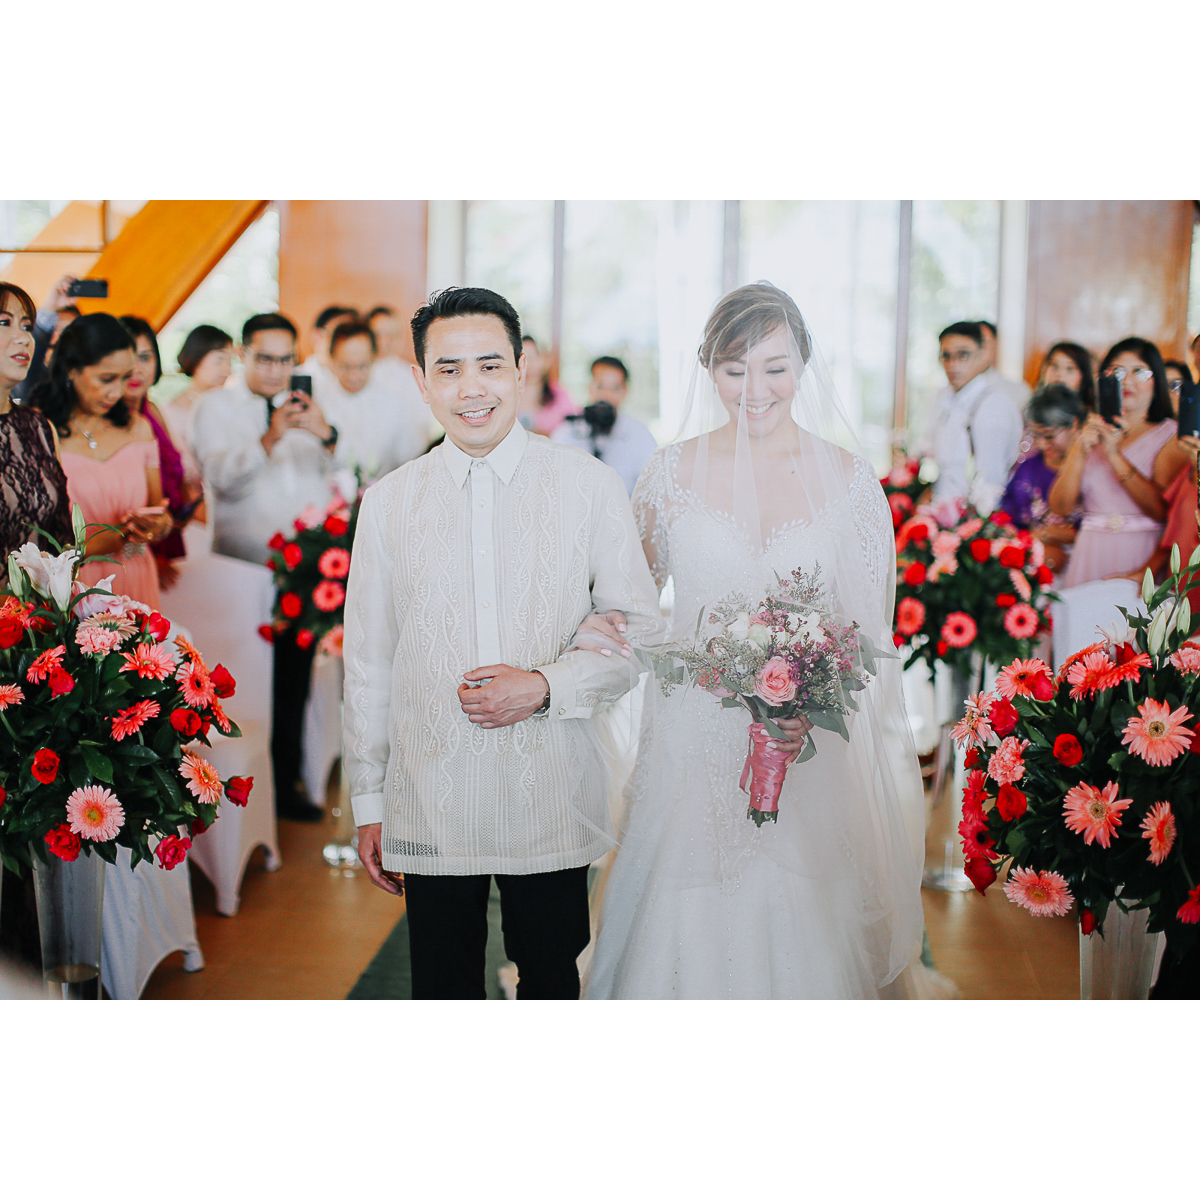 shang mactan wedding0047 - Coleen & Seigfred's Shangrila Mactan Cebu Destination Wedding